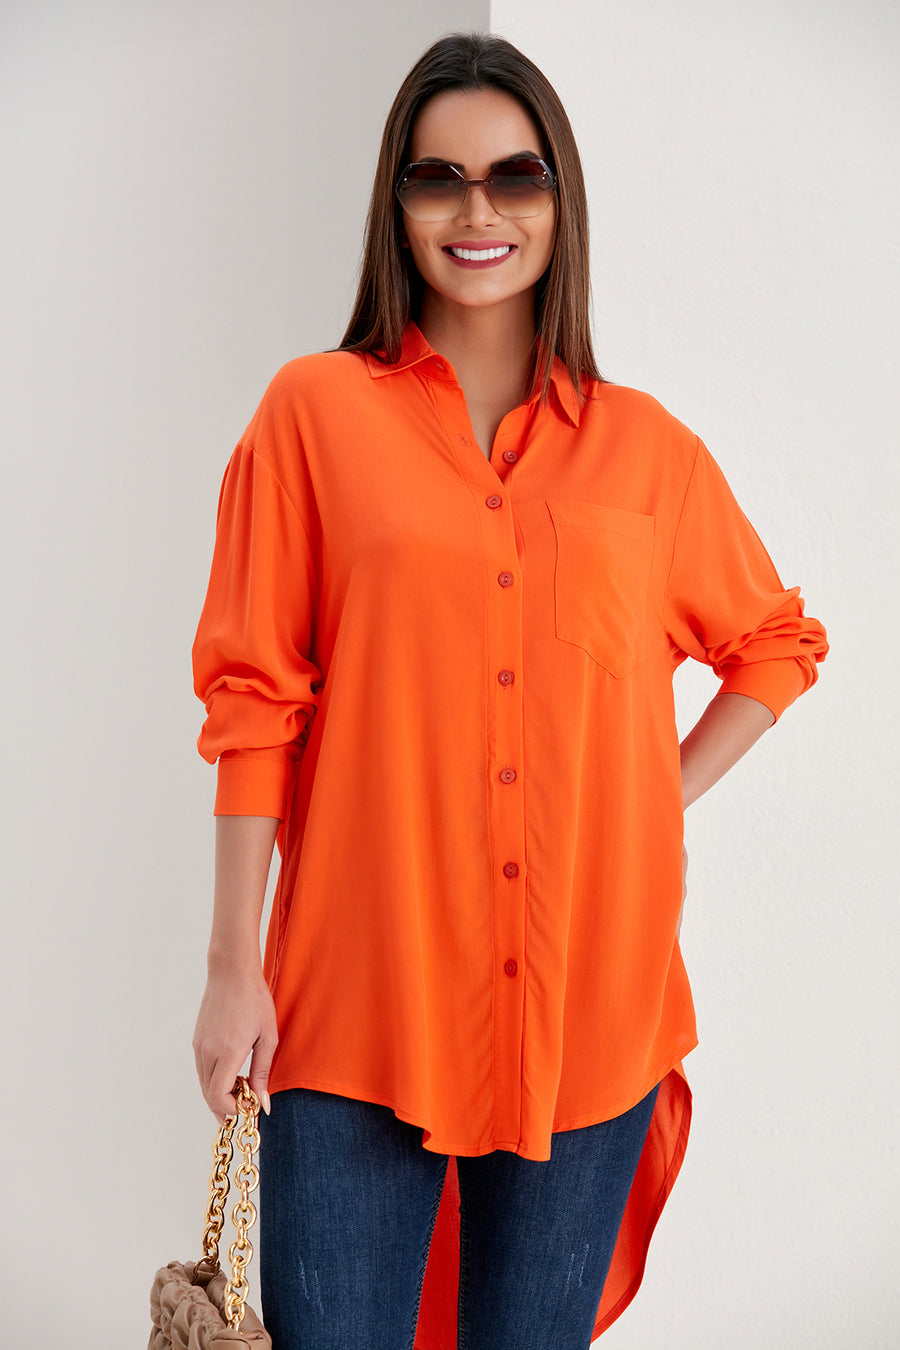 Wholesale Women's Long Sleeve Summer Relax Shirt Tunic Tops Tee